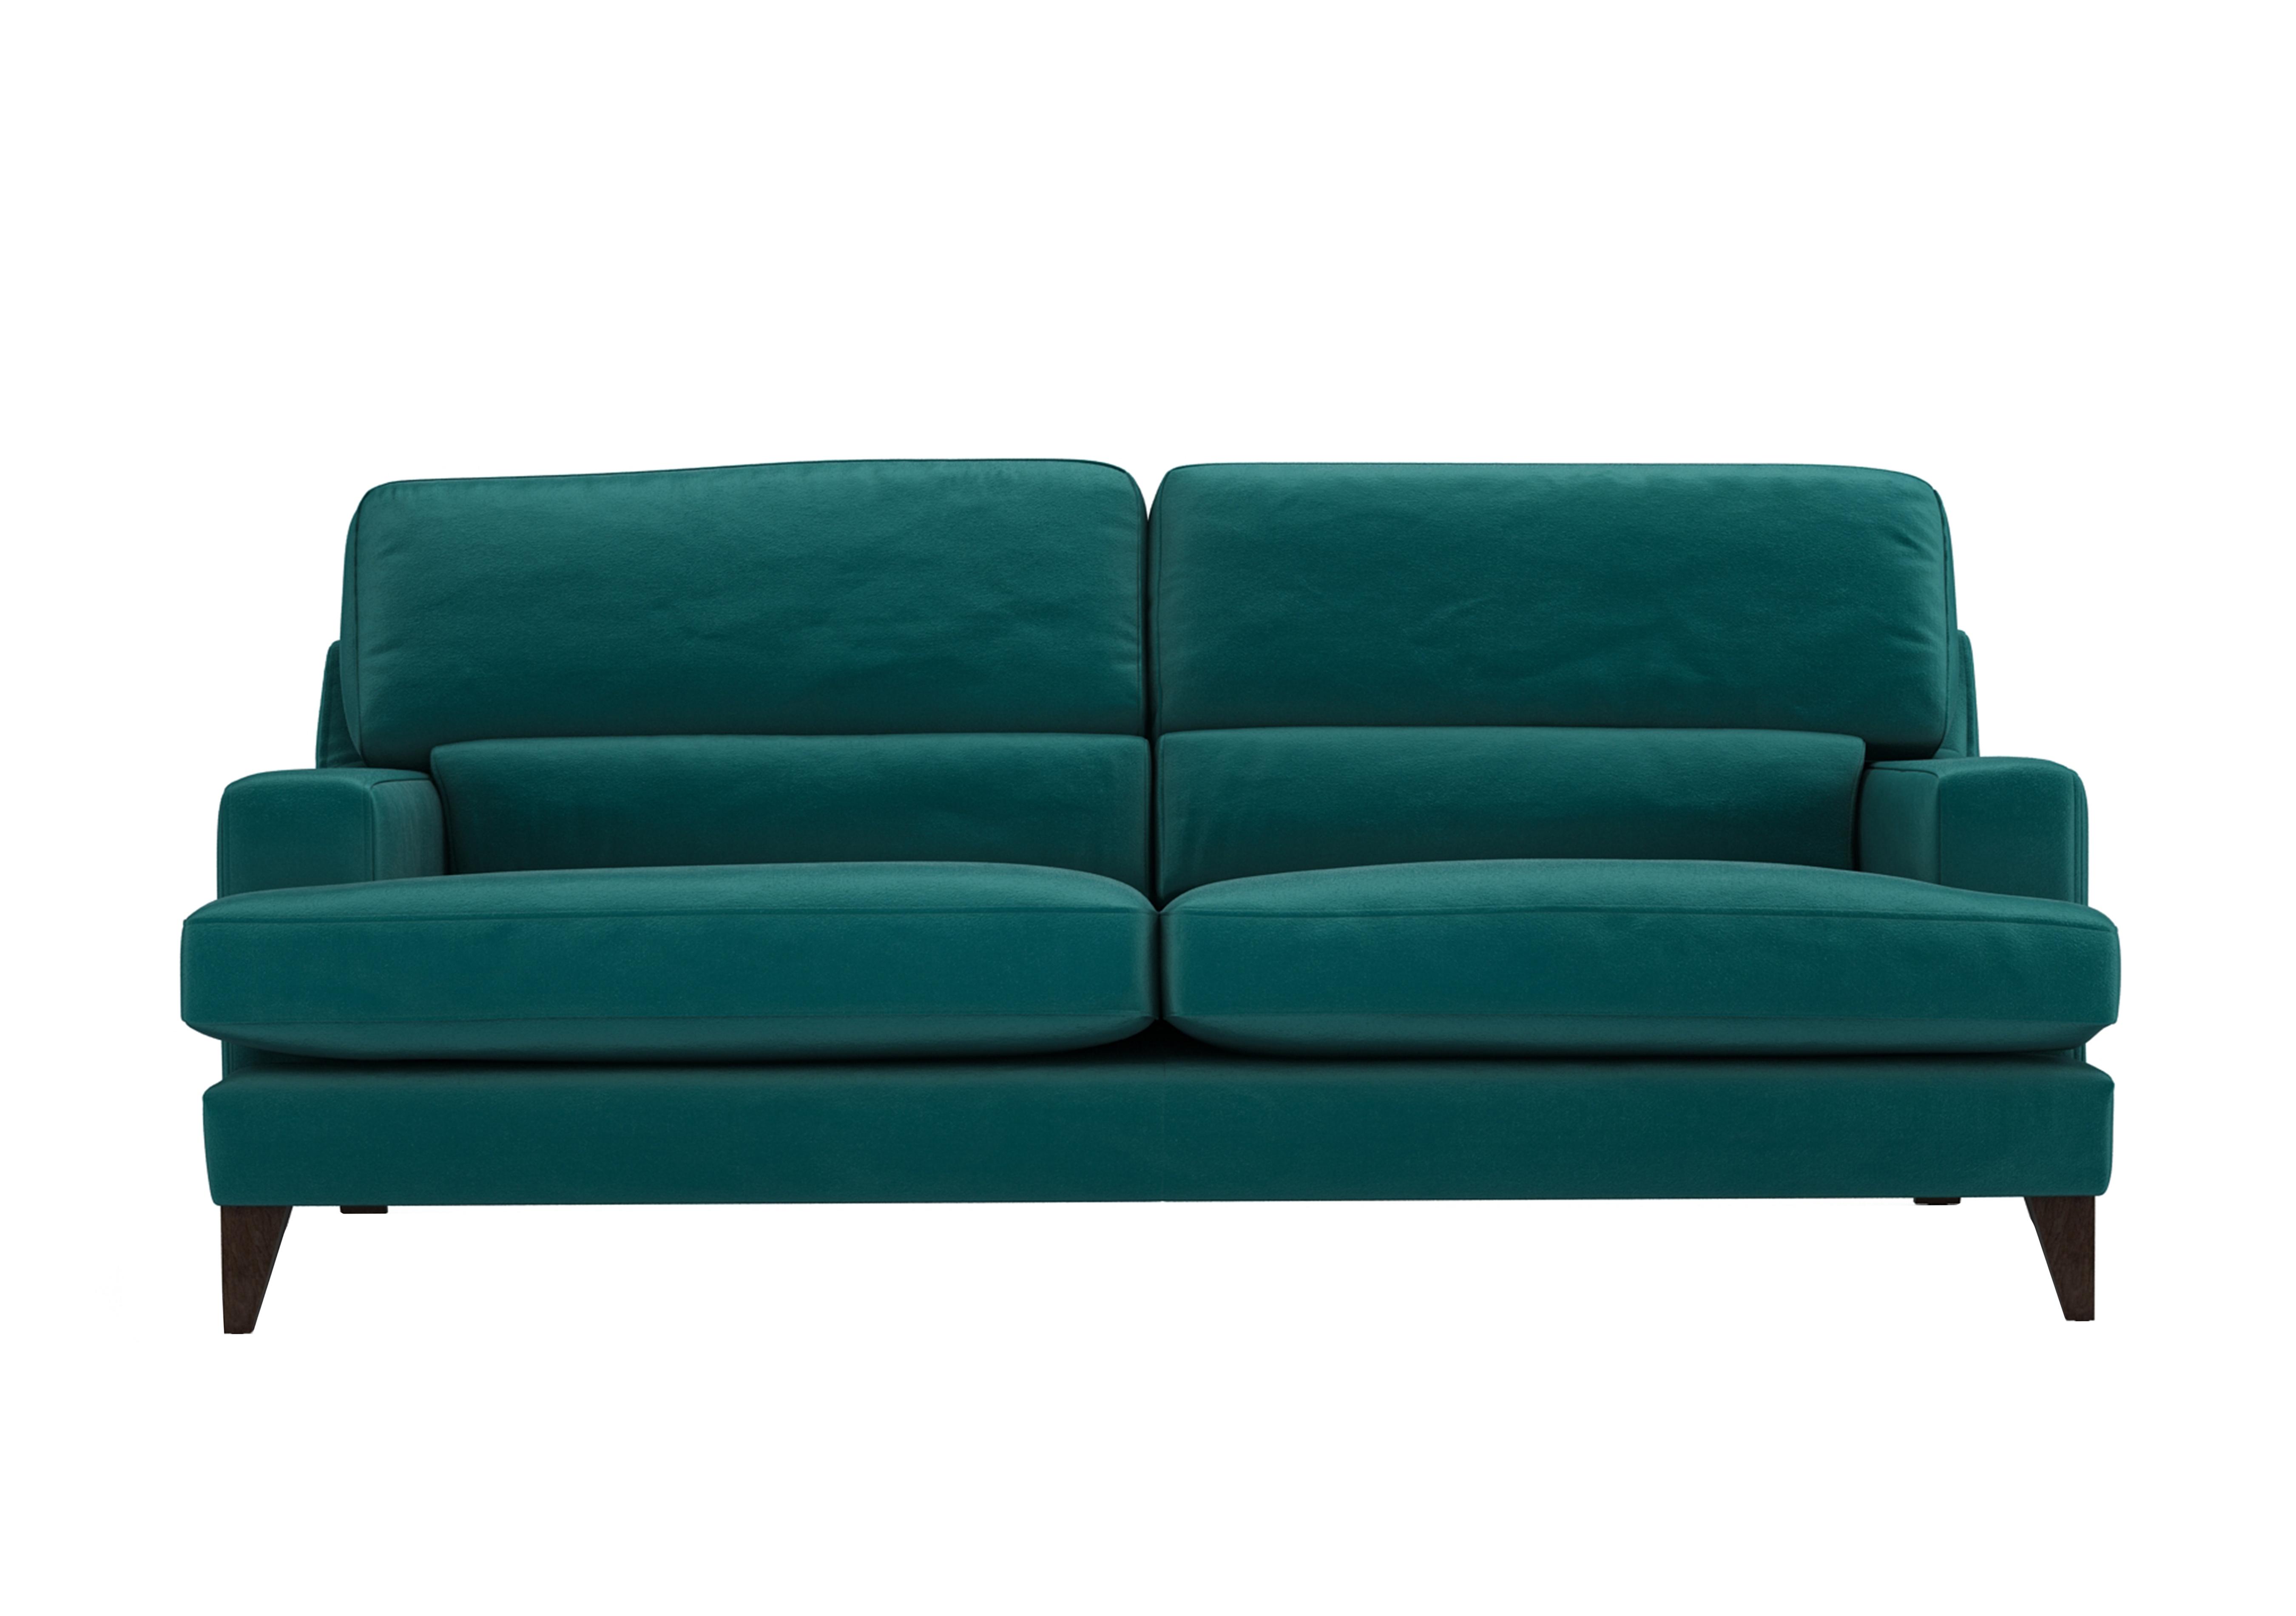 Romilly 4 Seater Fabric Sofa in Dra008 Dragoneye Wa Ft on Furniture Village